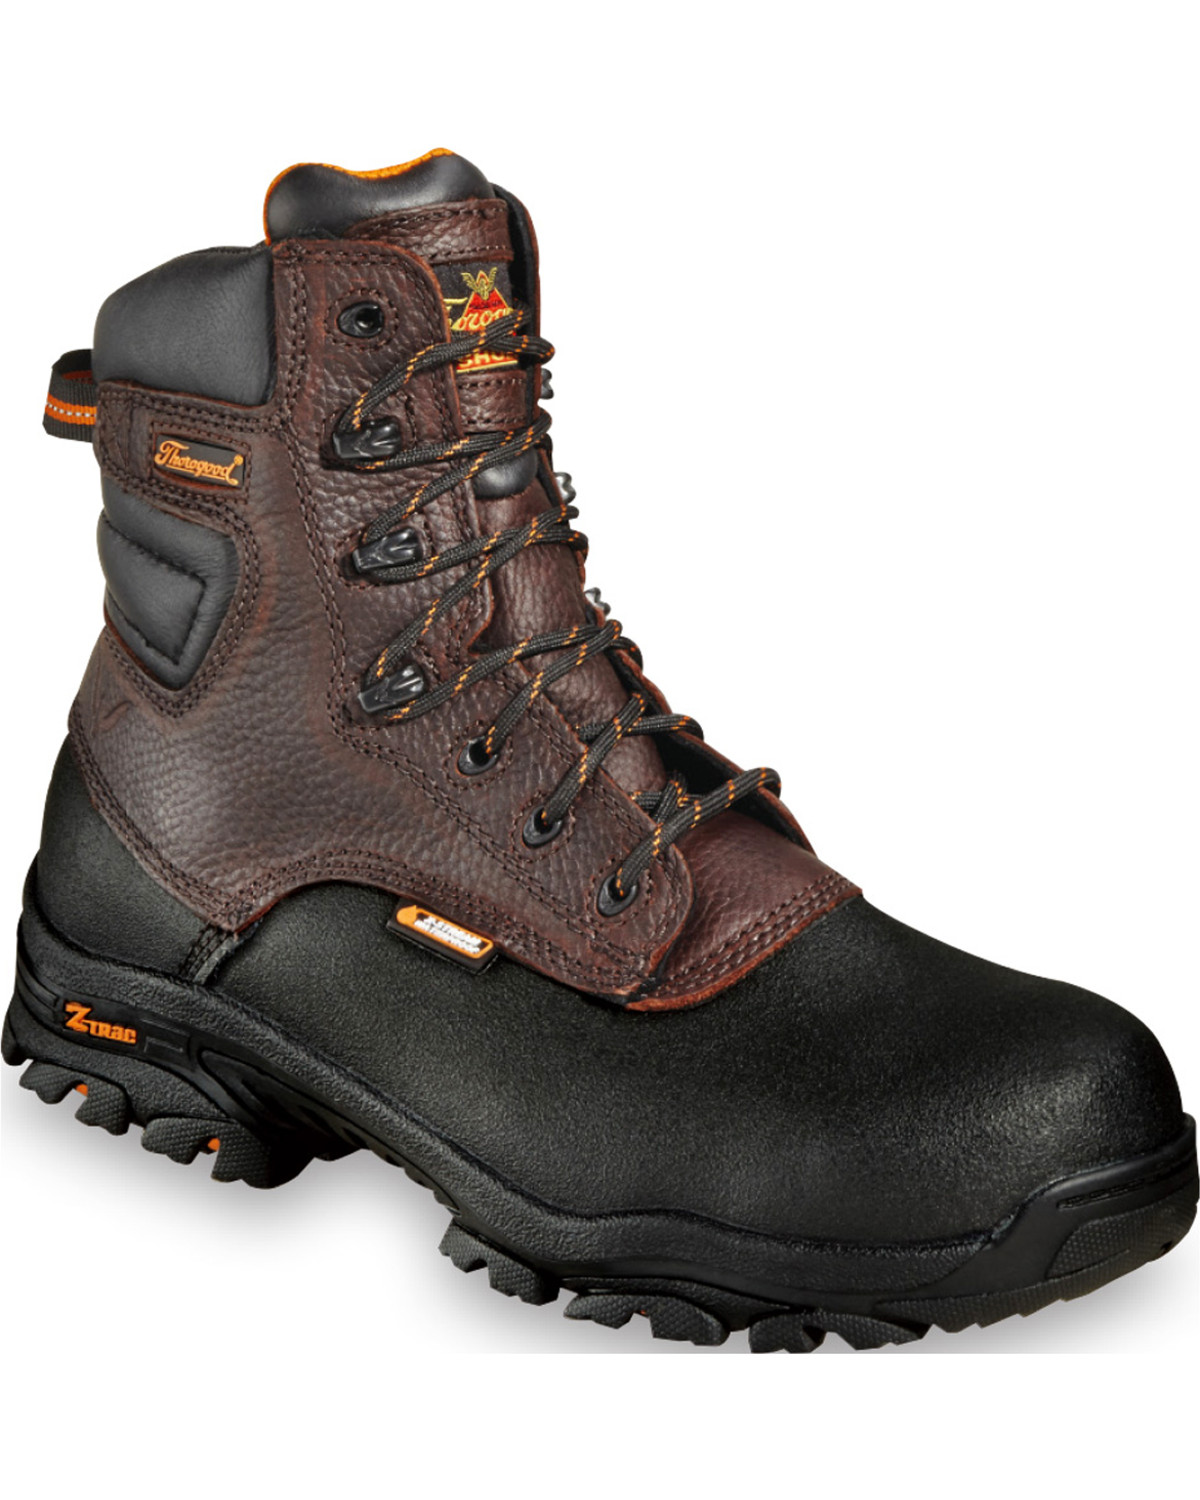 thorogood boots waterproof safety toe